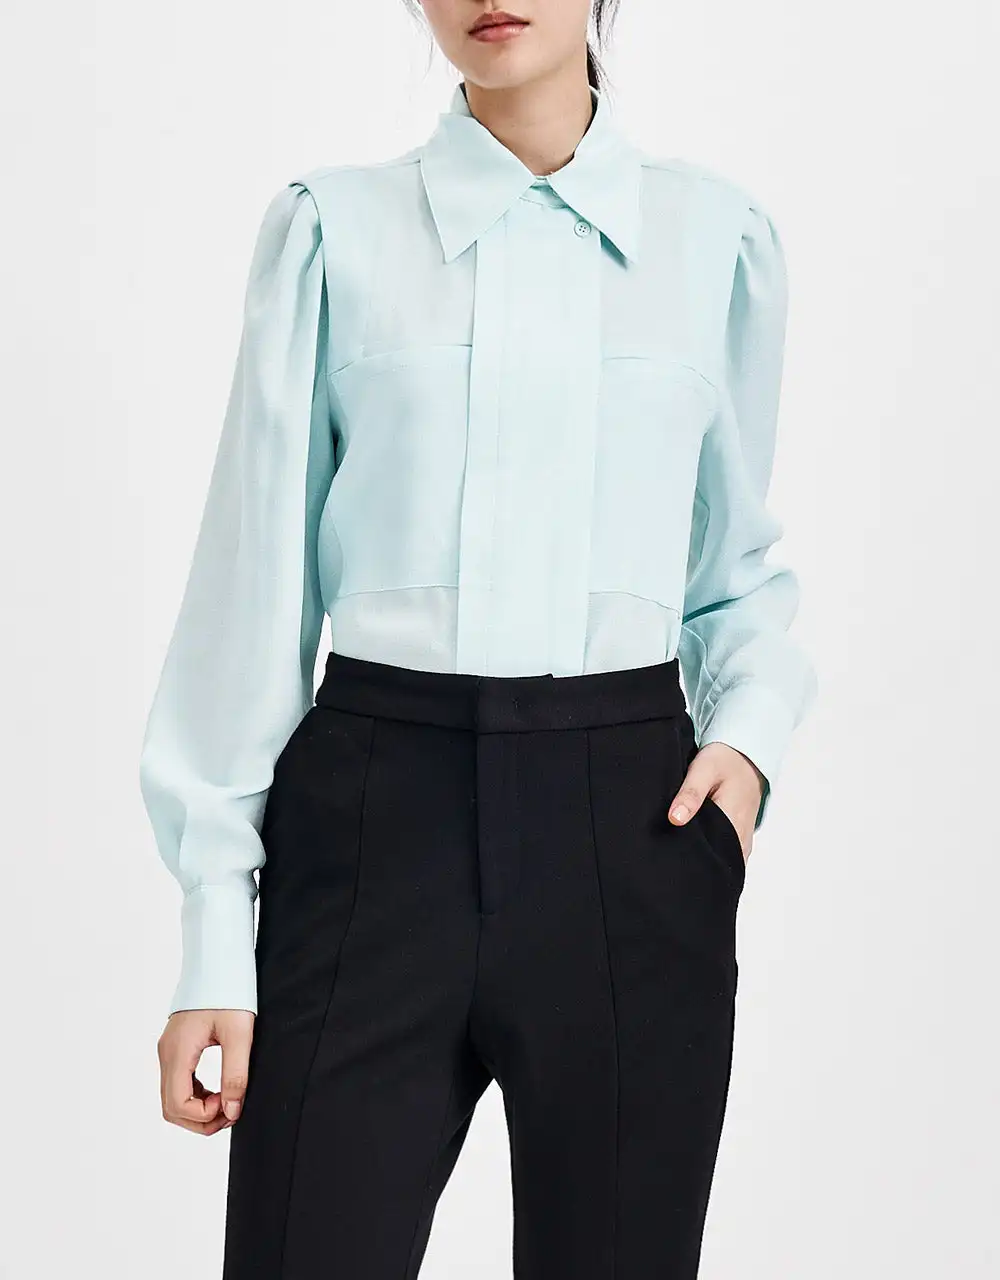 Urban Revivo Women Shoulder Pad Chiffon Shirt Vintage Blouse Women Long Sleeve Elegant Shirts Fashion Office Lady Tops